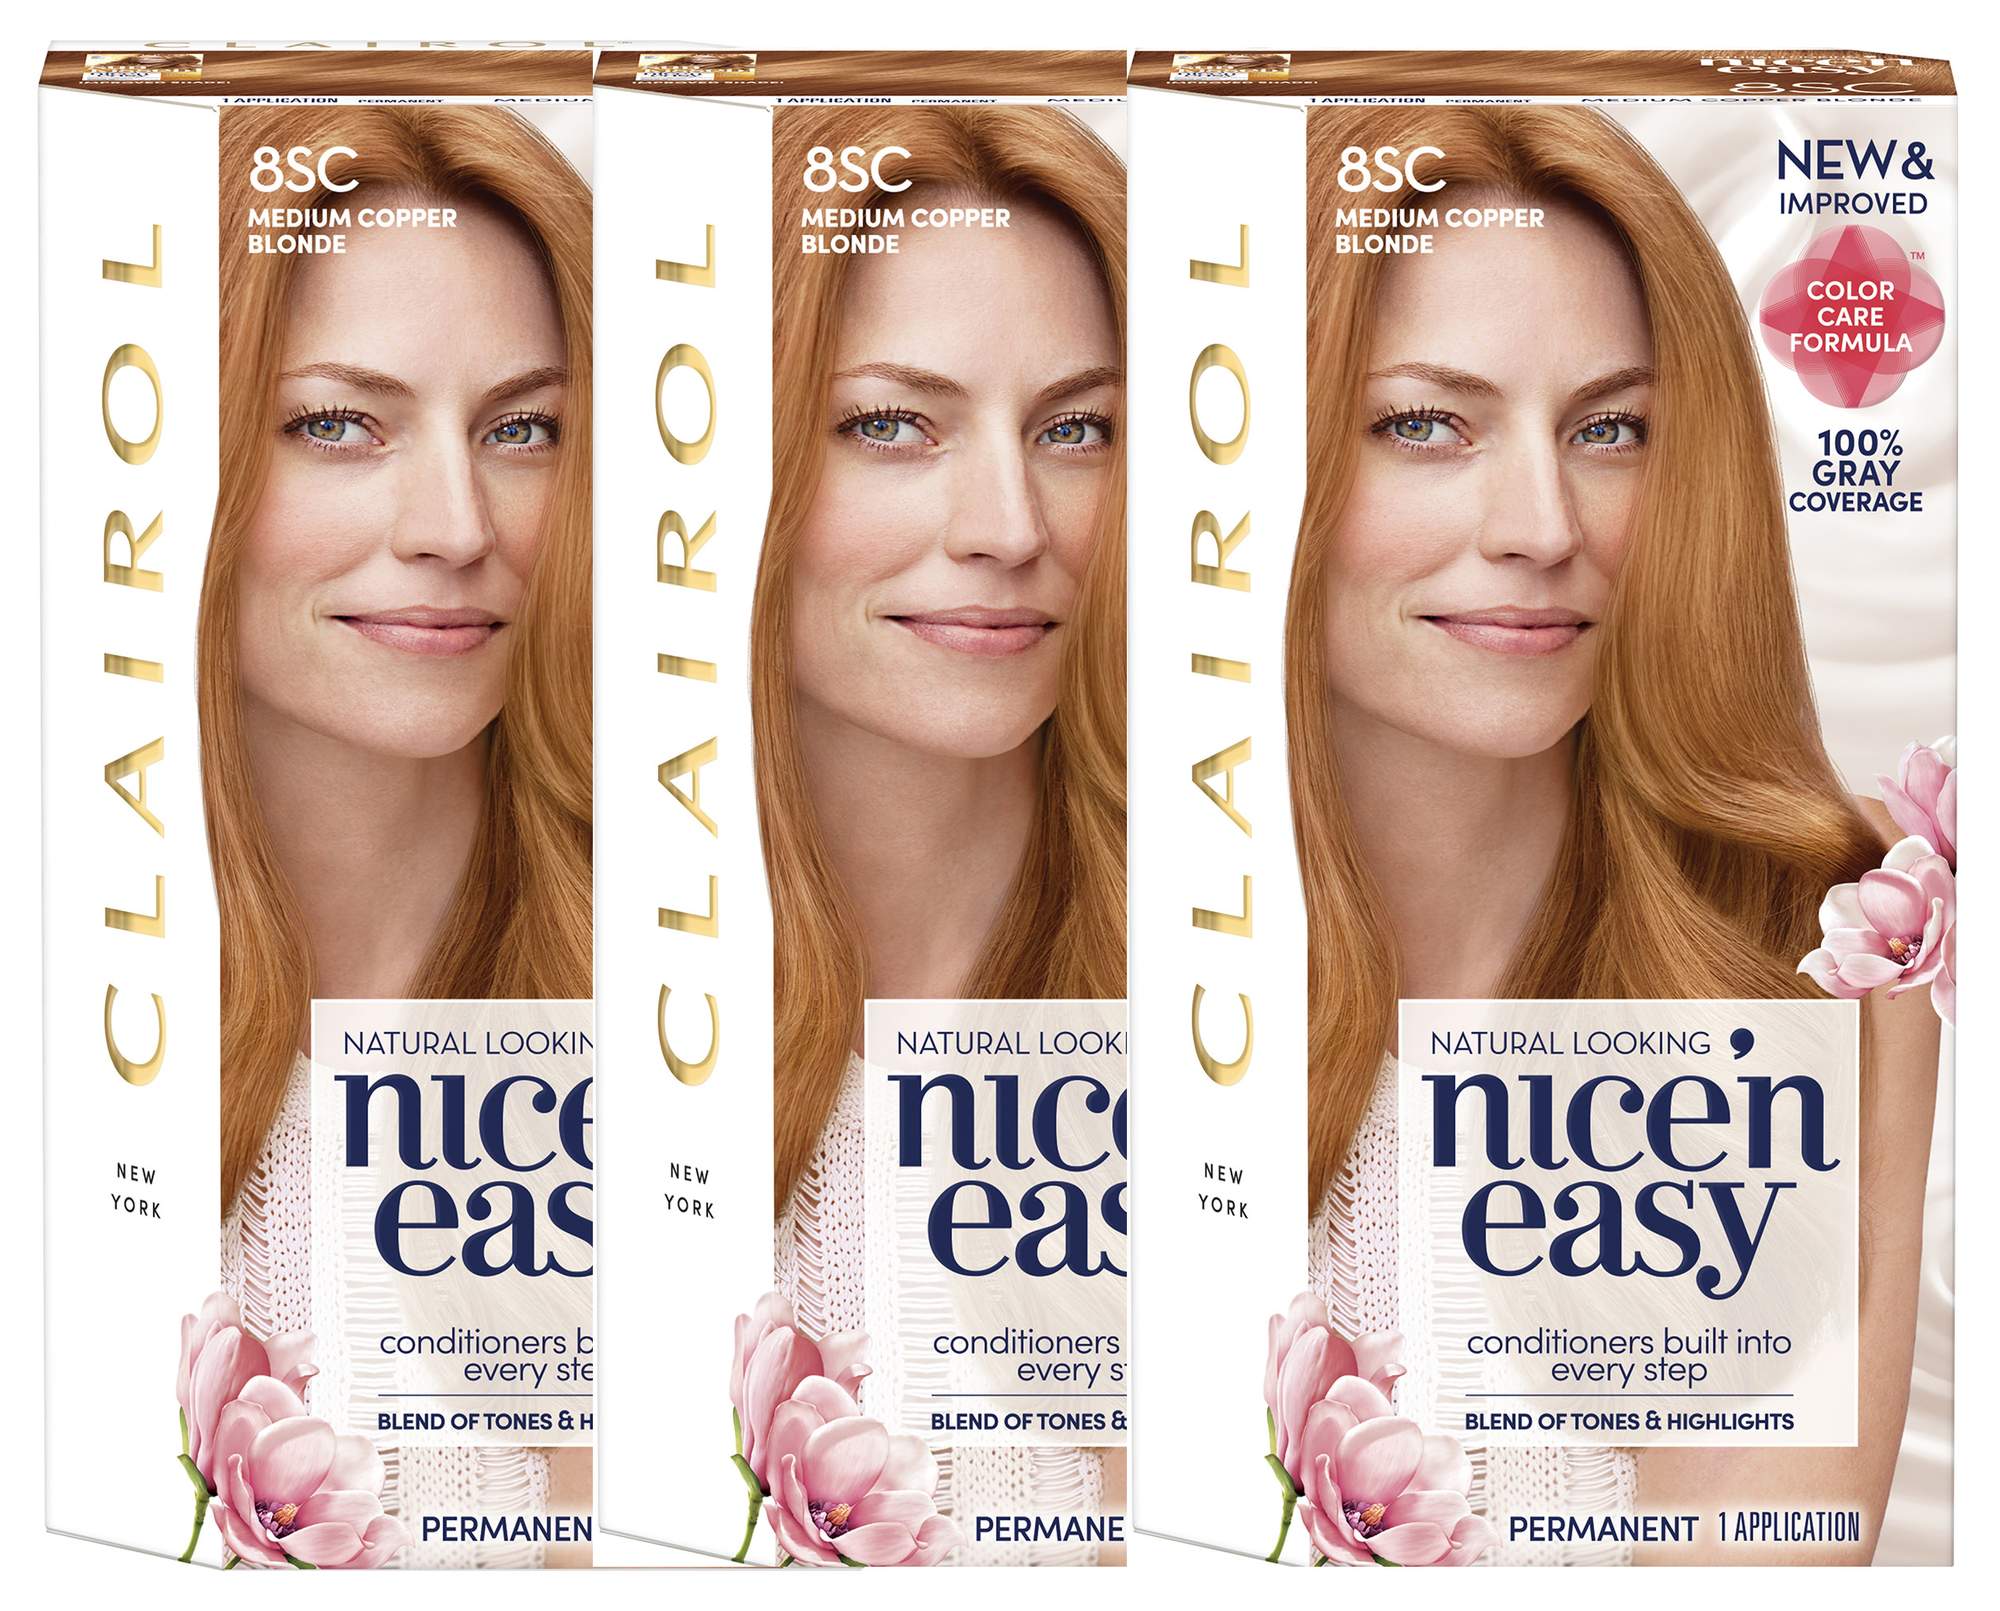 3. Clairol Nice'n Easy Permanent Hair Color, 8SC Medium Copper Blonde - wide 4